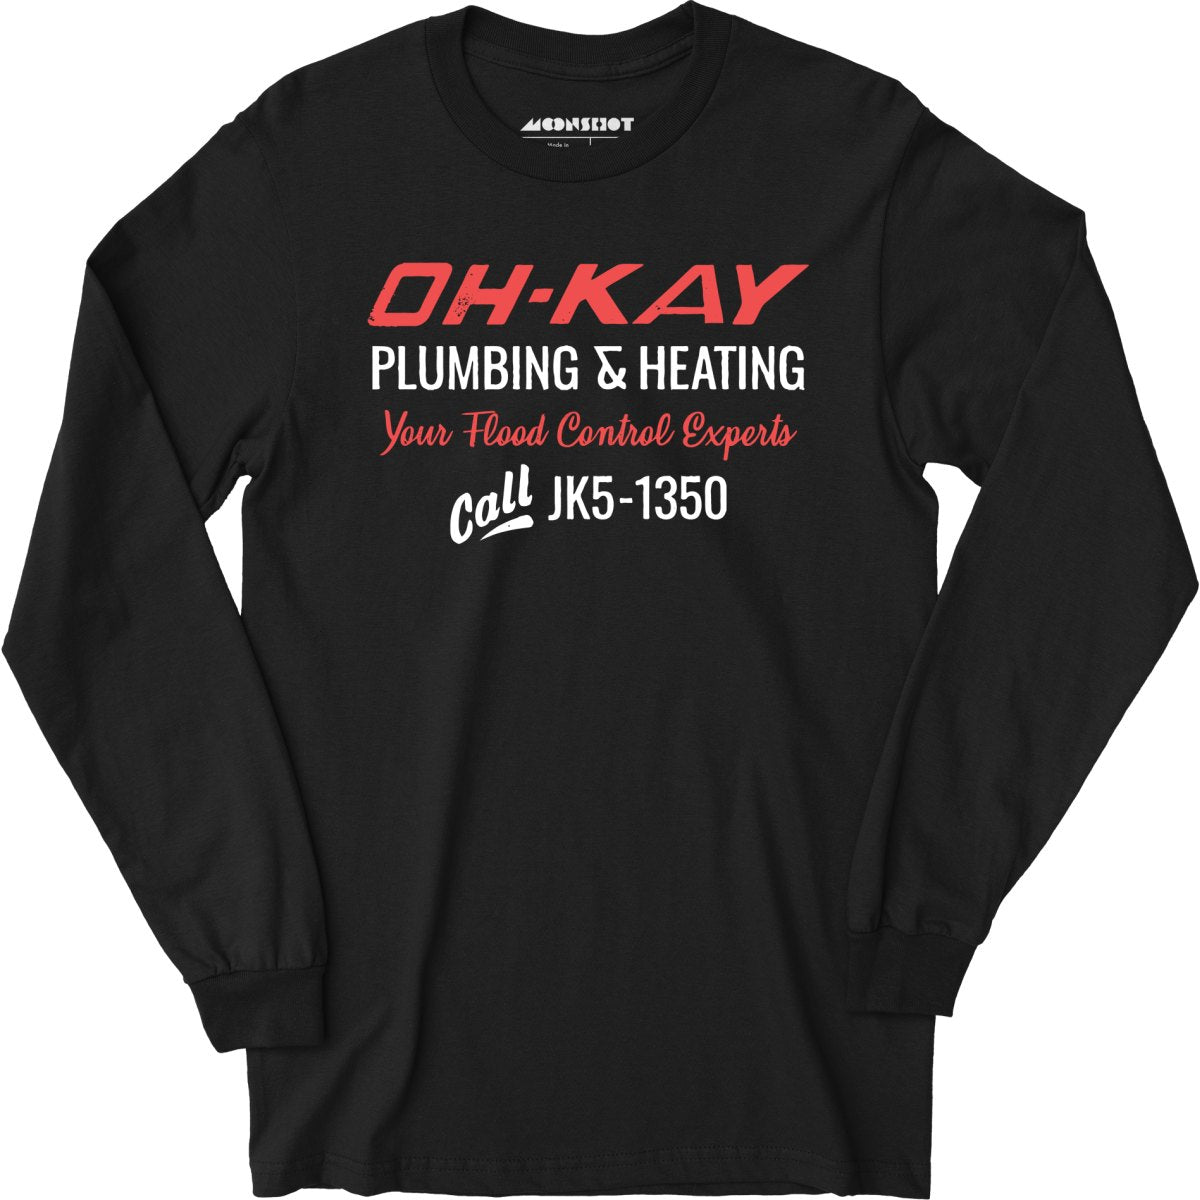 Oh-Kay Plumbing & Heating - Long Sleeve T-Shirt